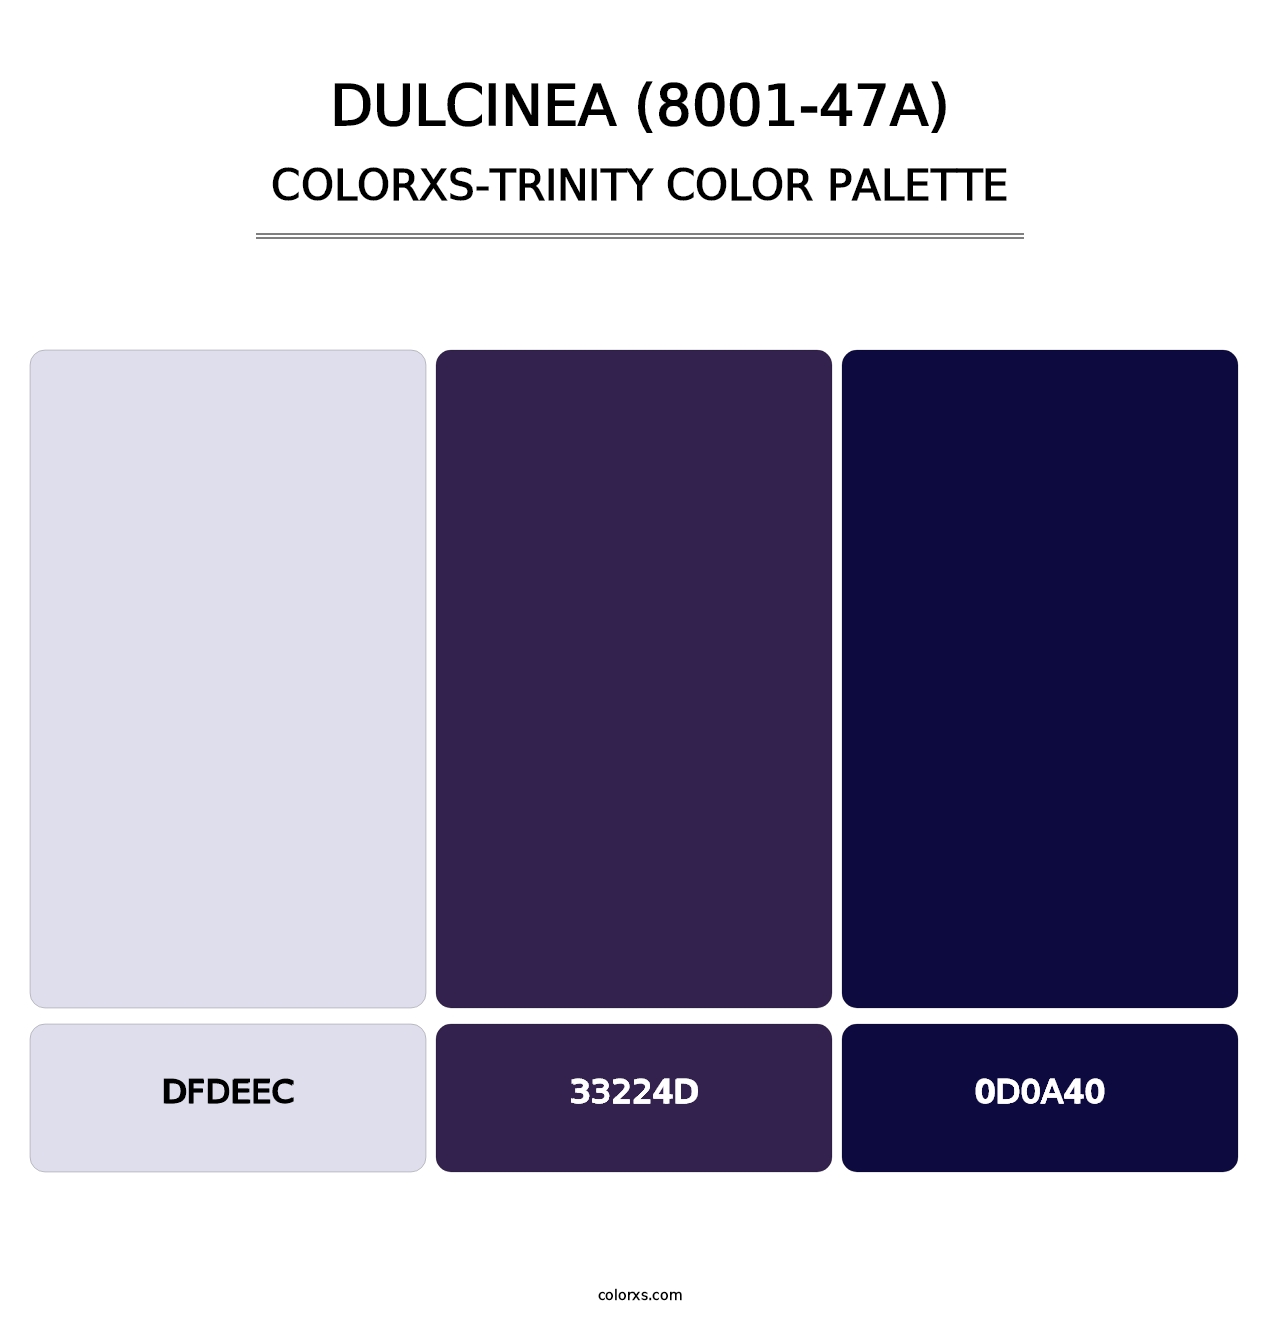 Dulcinea (8001-47A) - Colorxs Trinity Palette